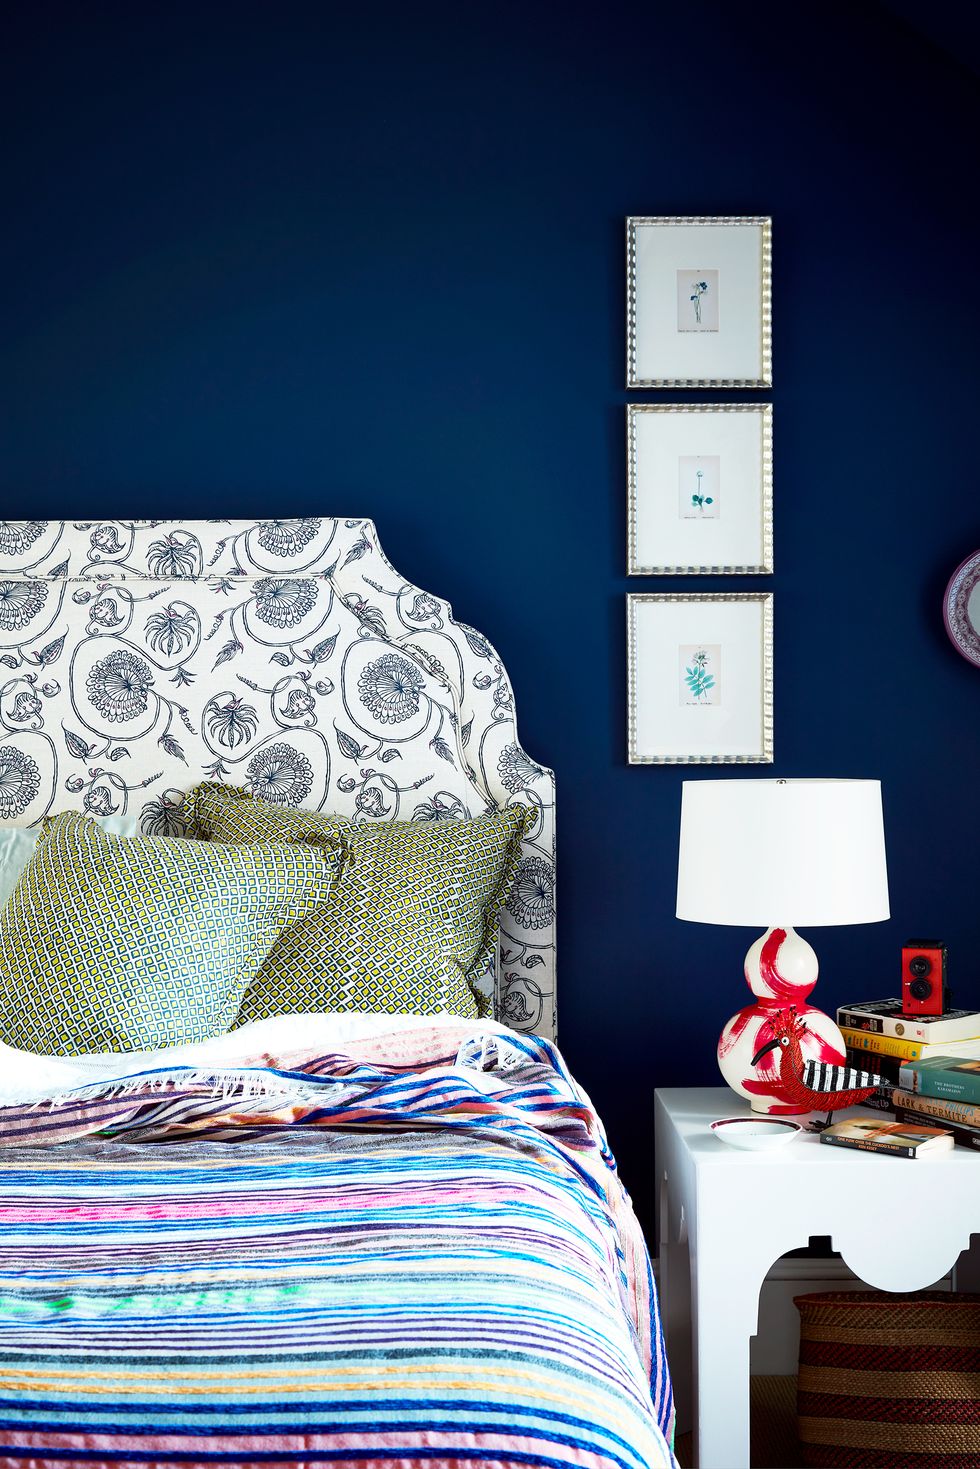 best color for bedroom walls